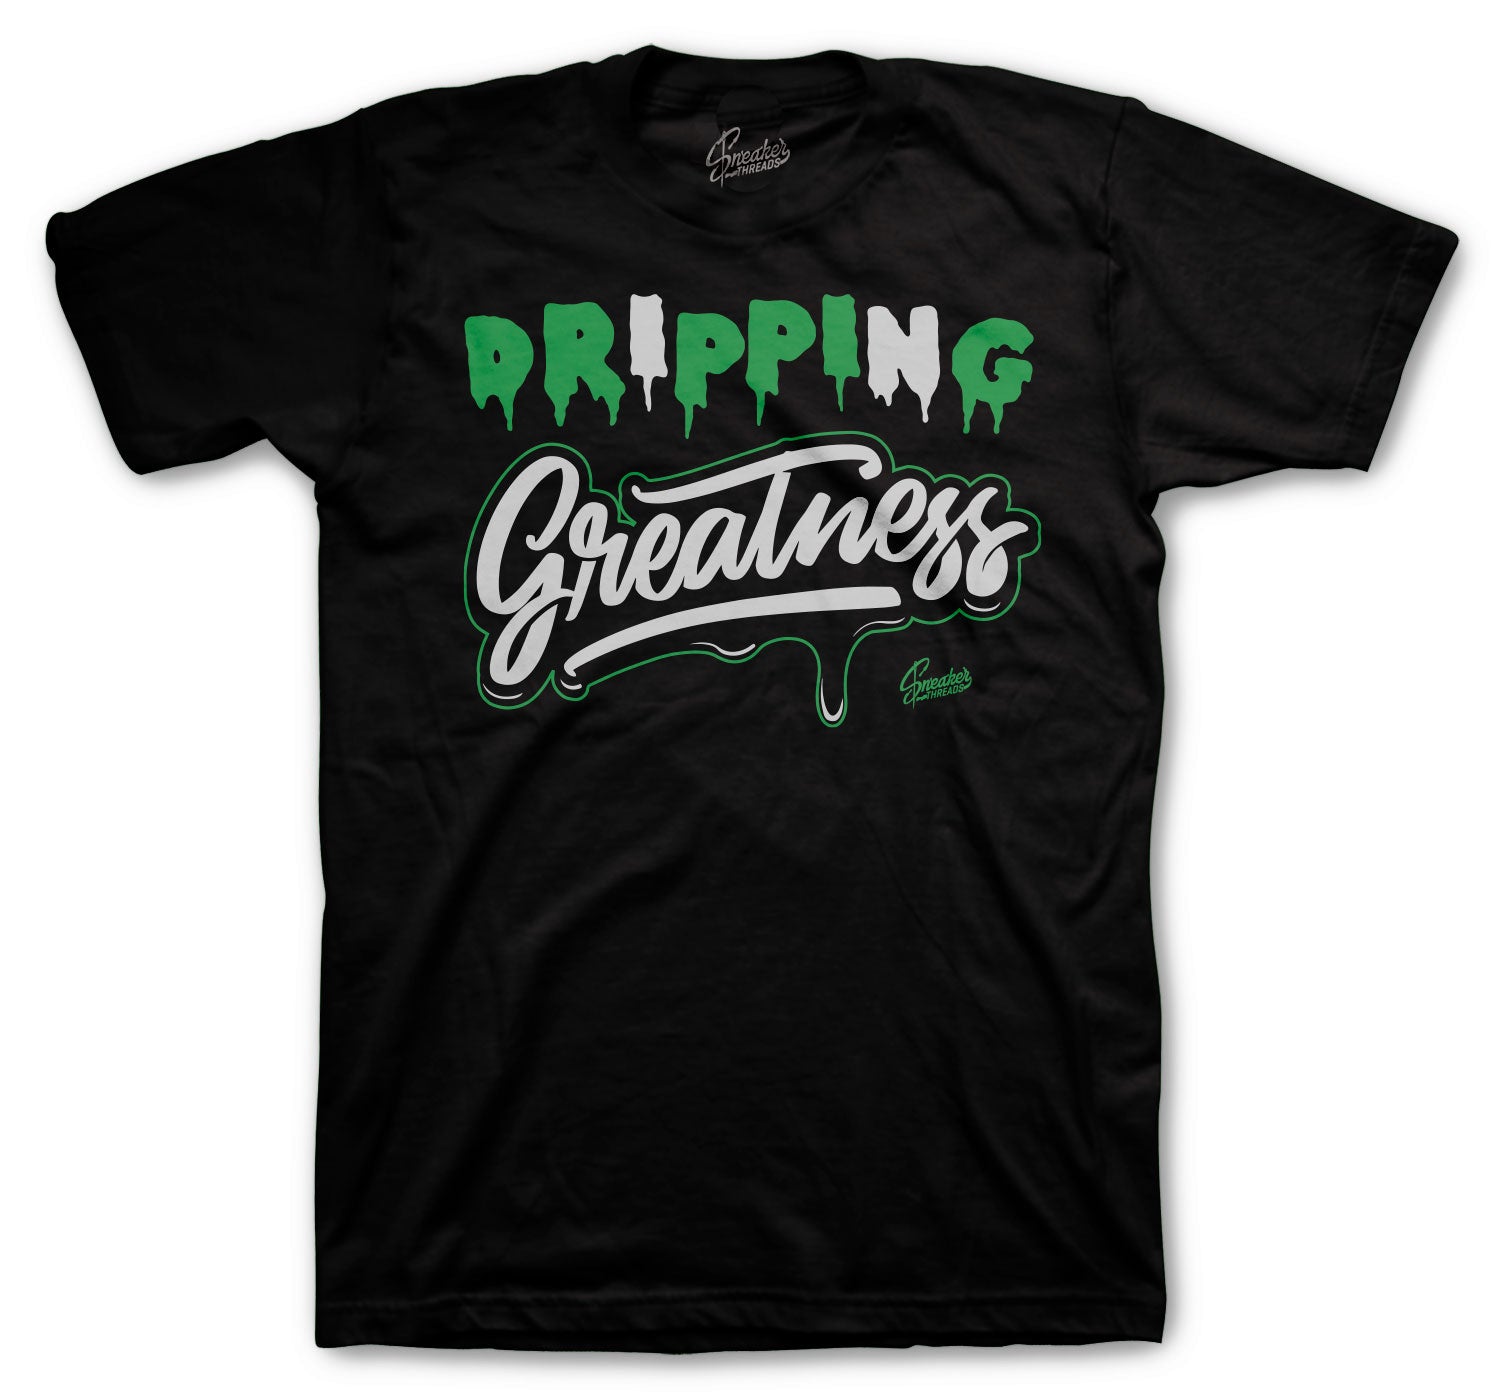 Retro 3 Pine Green Shirt - Dripping Greatness - Black